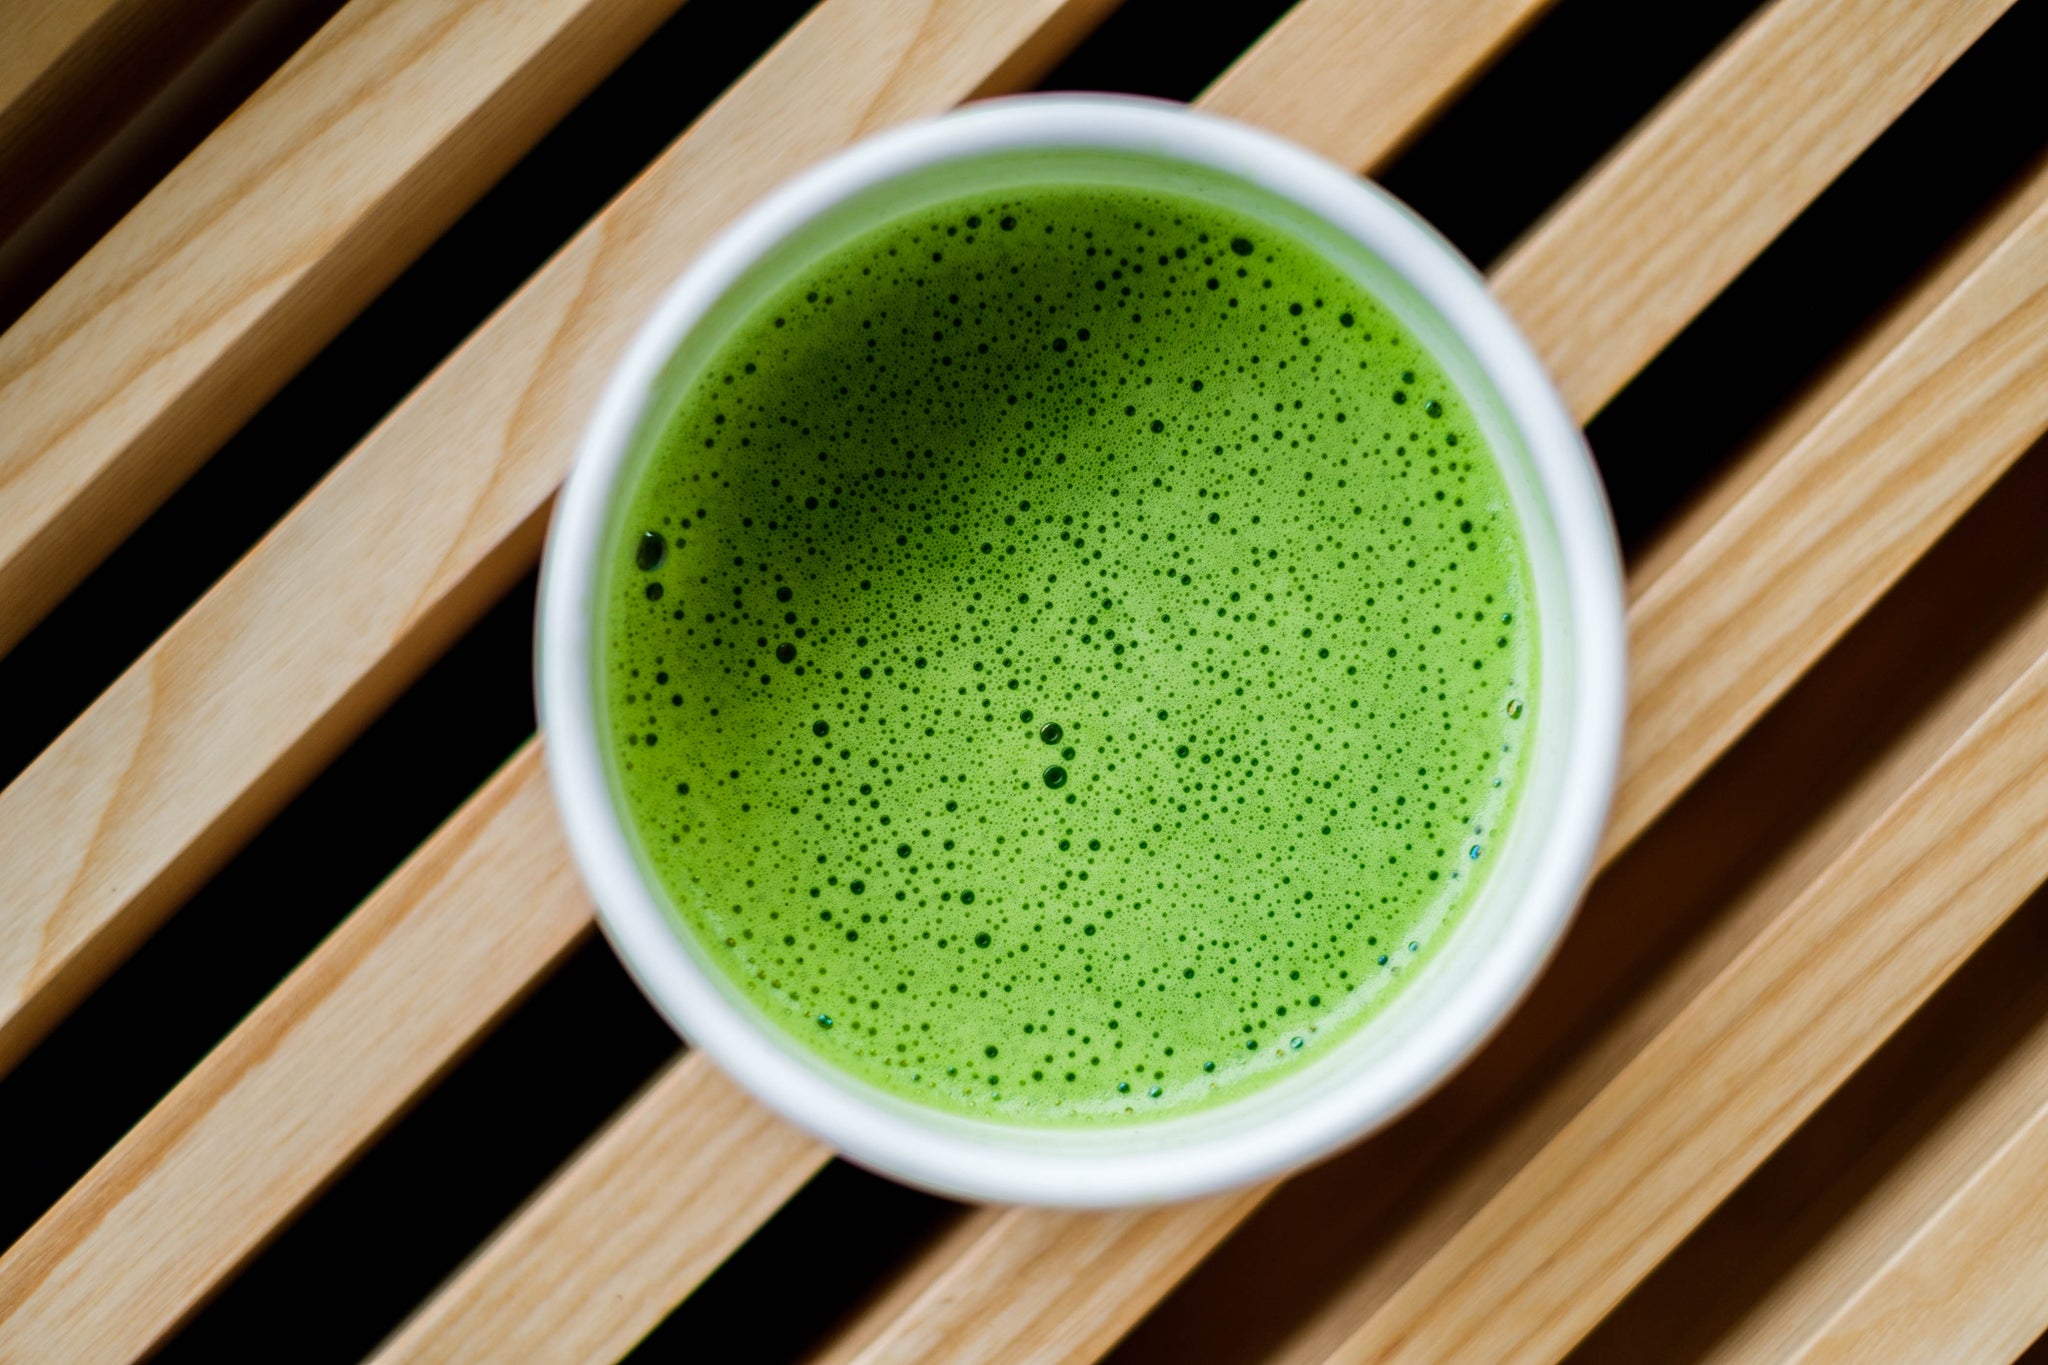 Ceremonial Matcha Green Tea from Japan.